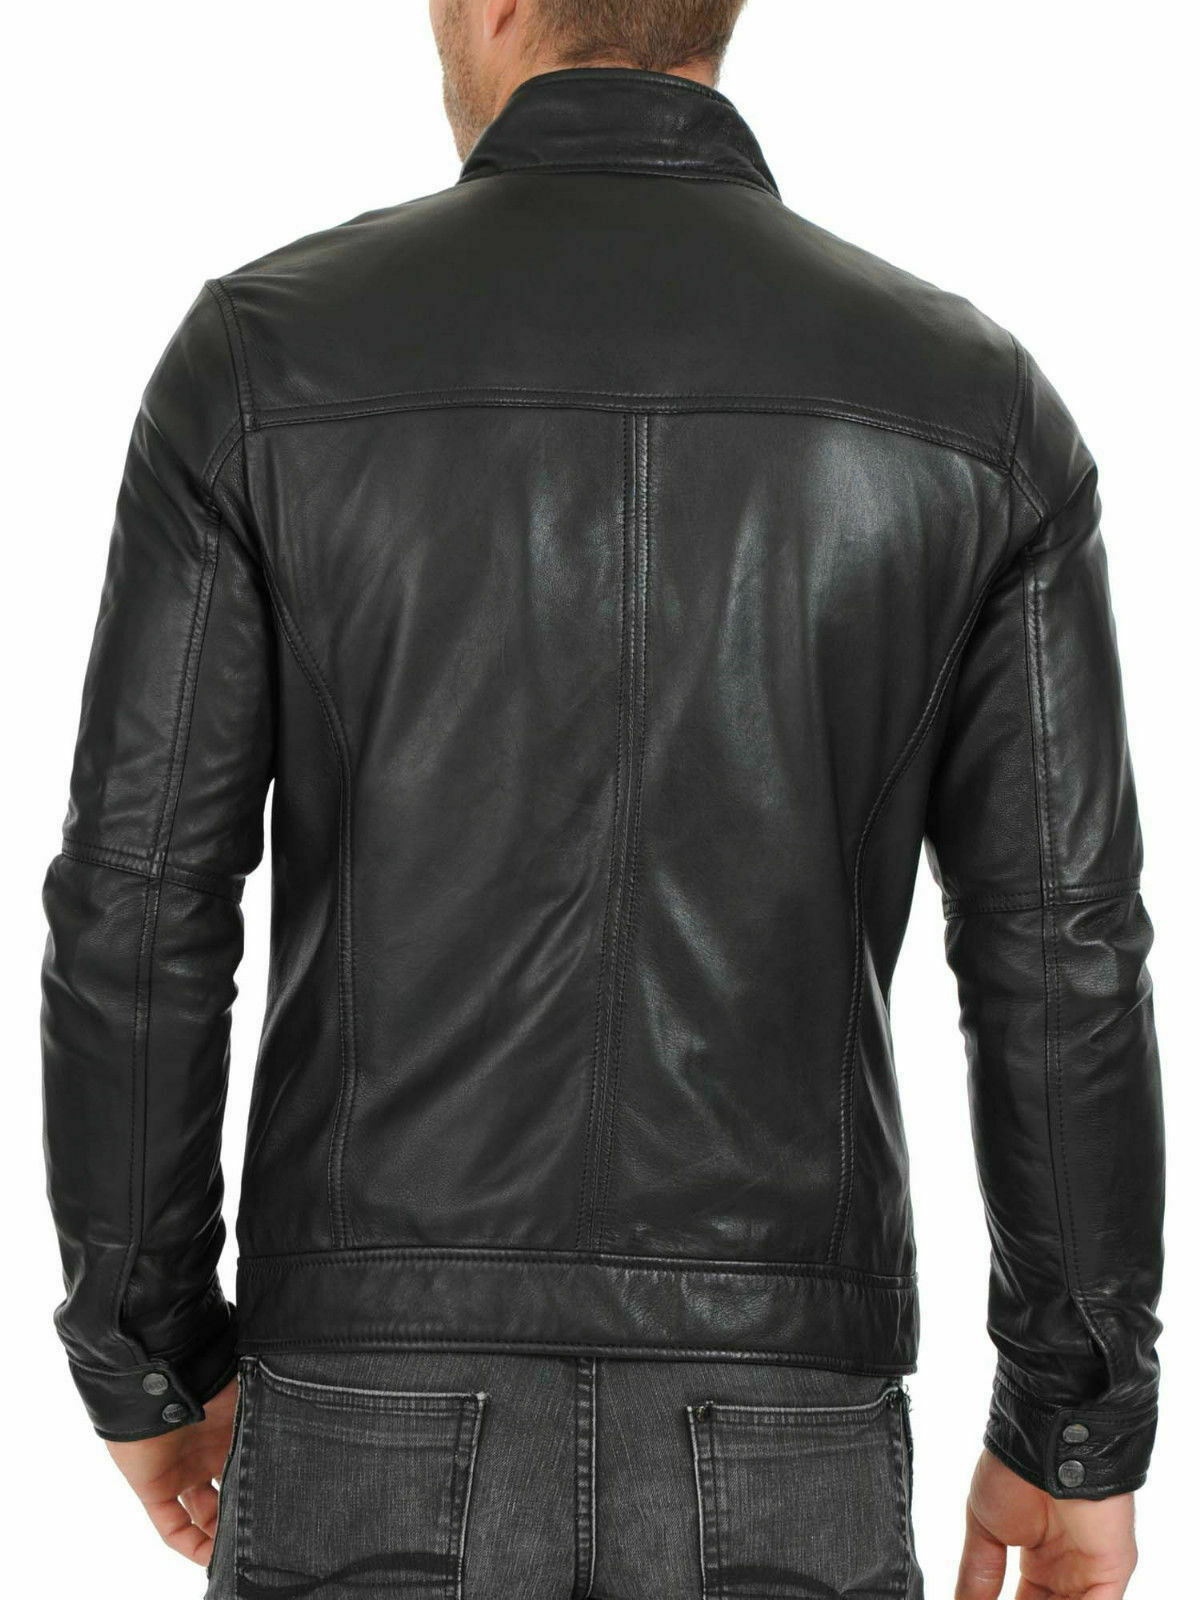 URBAN Men 100% Leather Jacket Motorcycle Slim fit Biker Genuine lambskin Coat